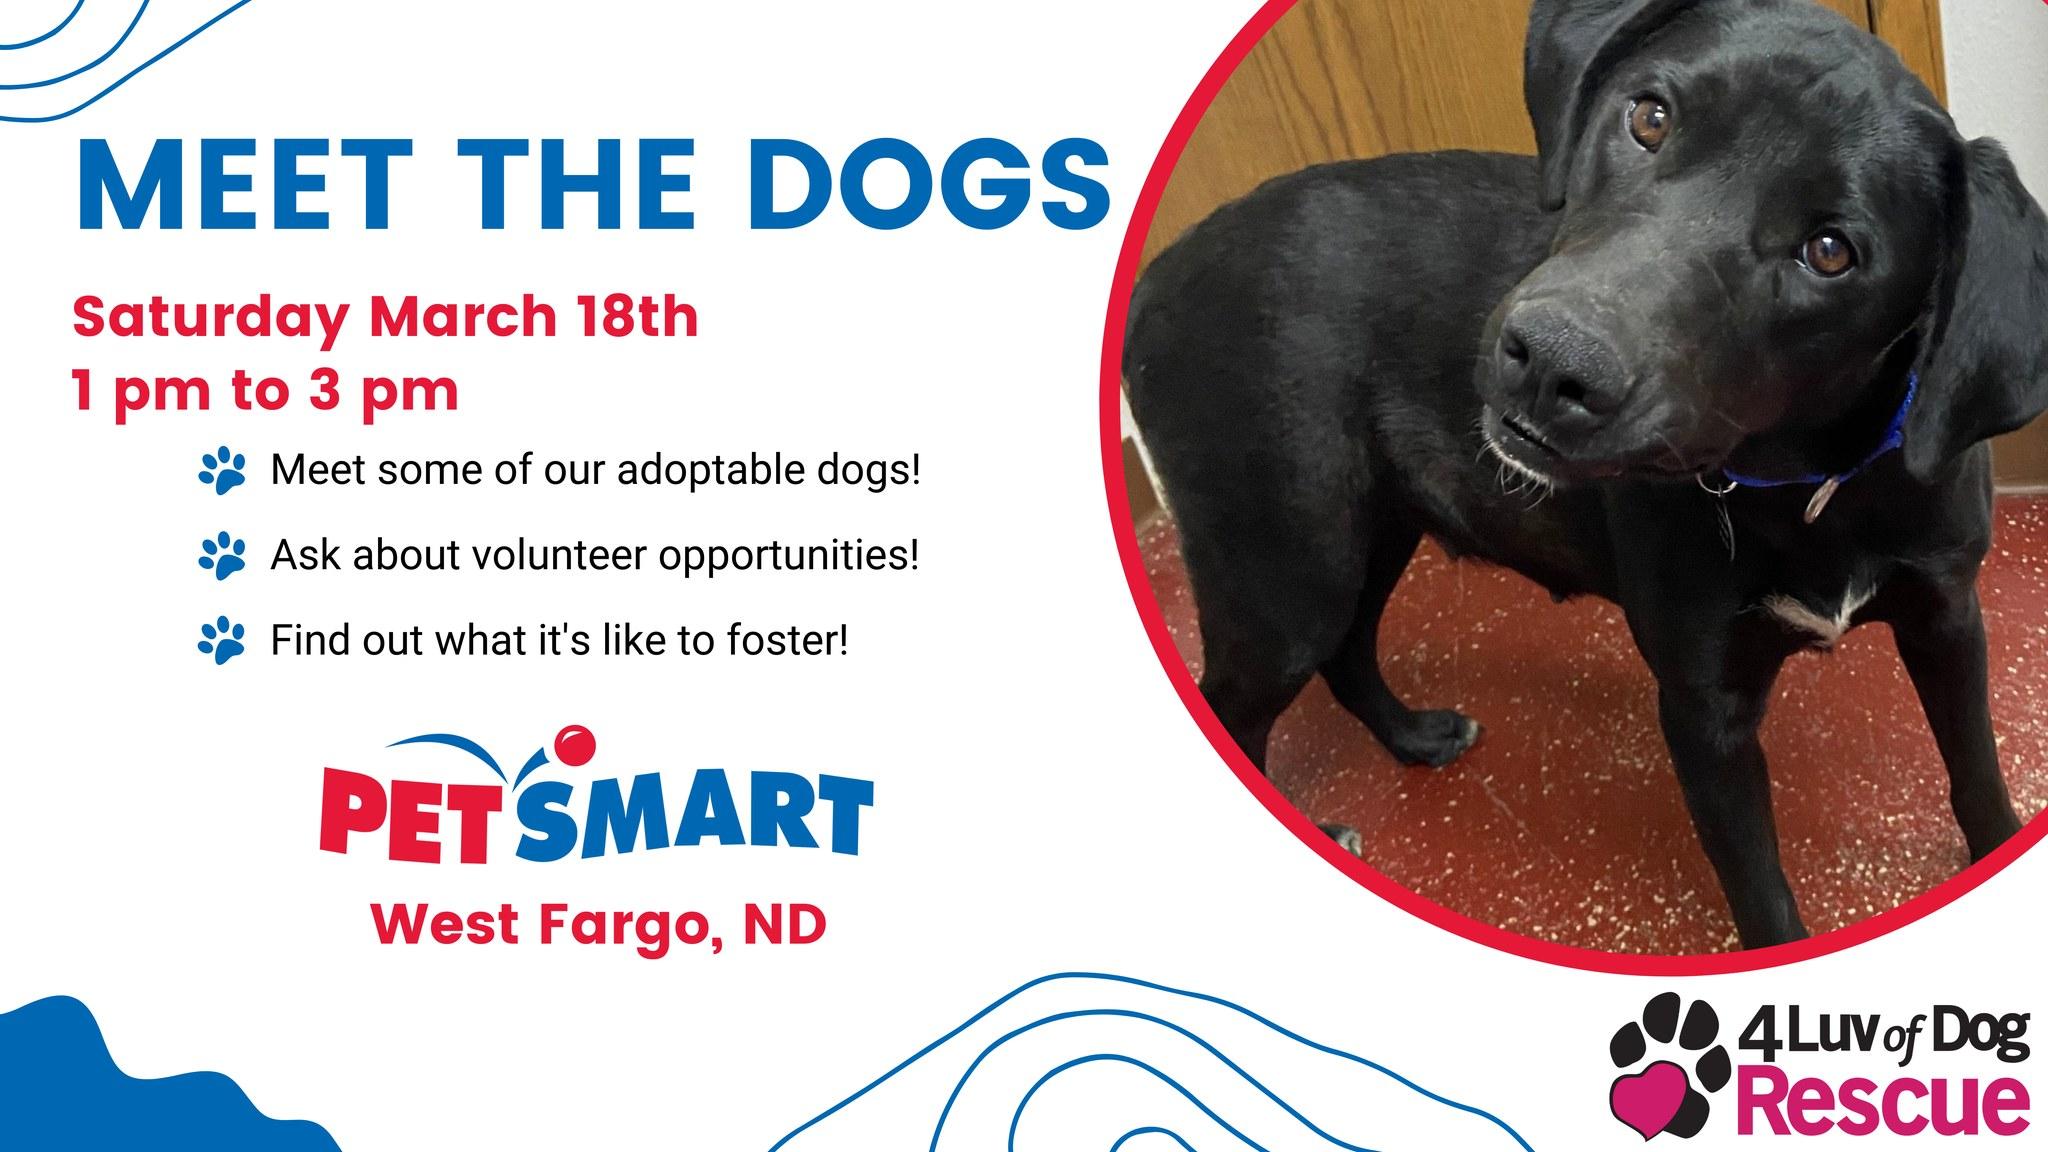 Meet the Dogs - West Fargo, ND PetSmart Event - March 18, 2023